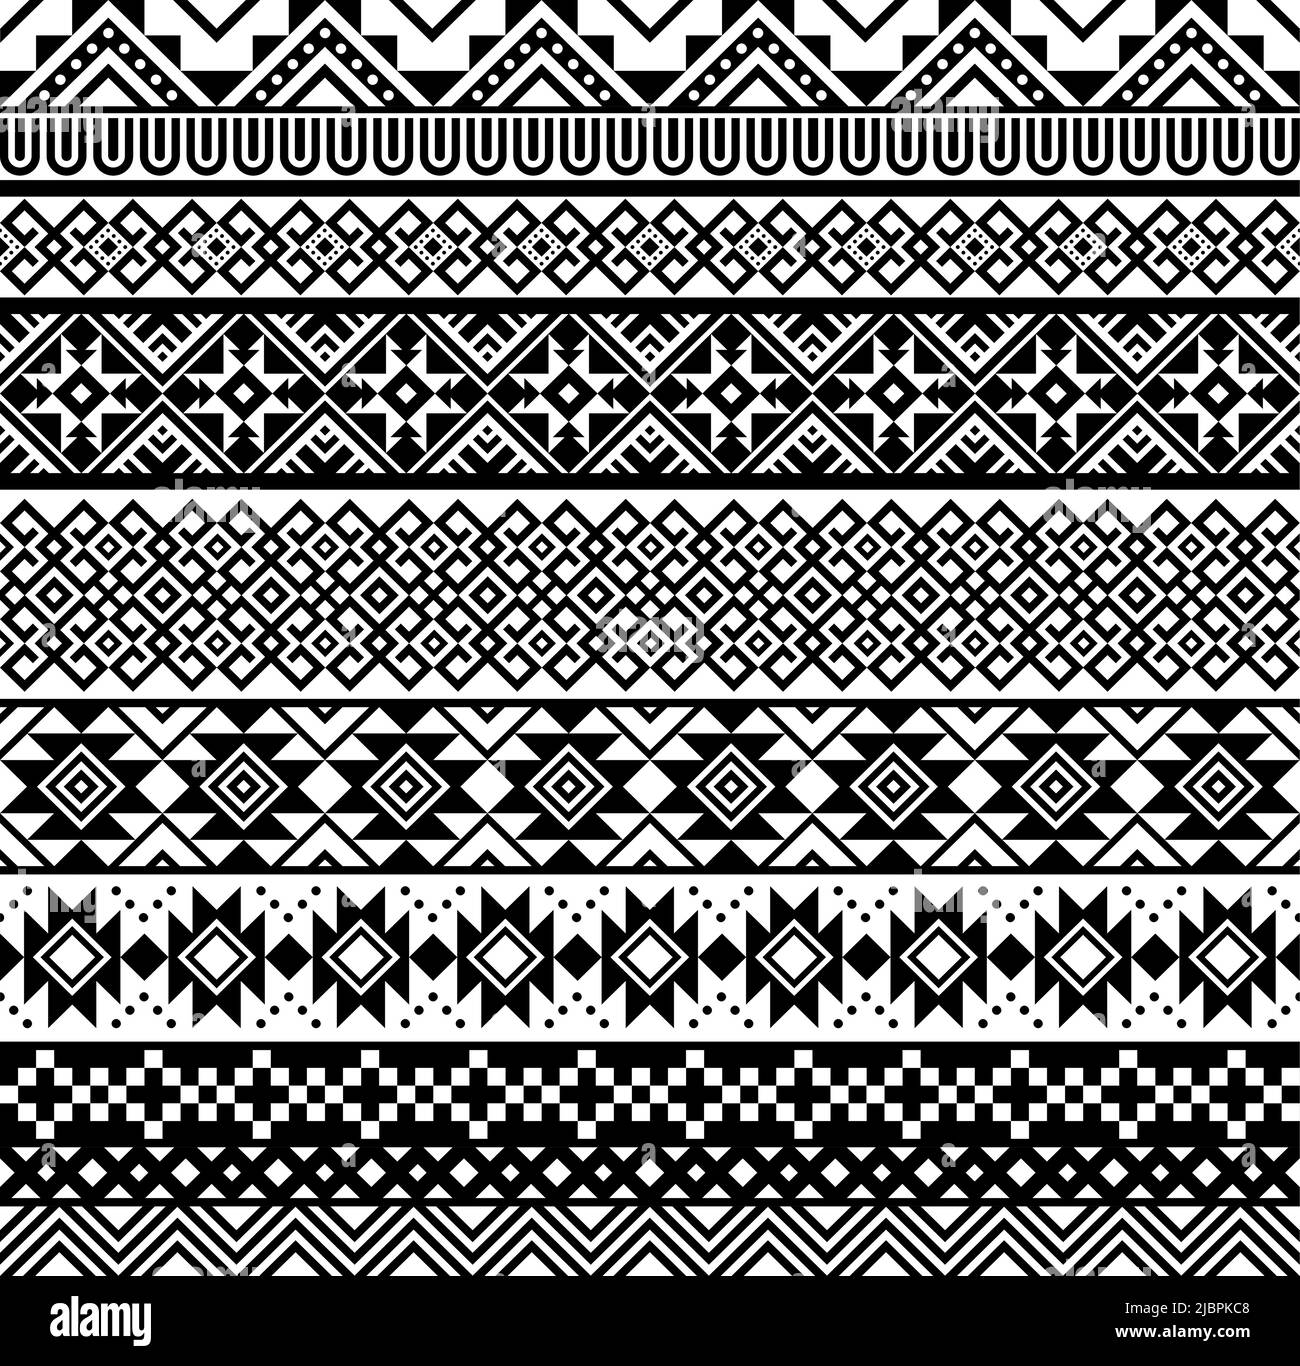 Native american indian motif border Black and White Stock Photos ...